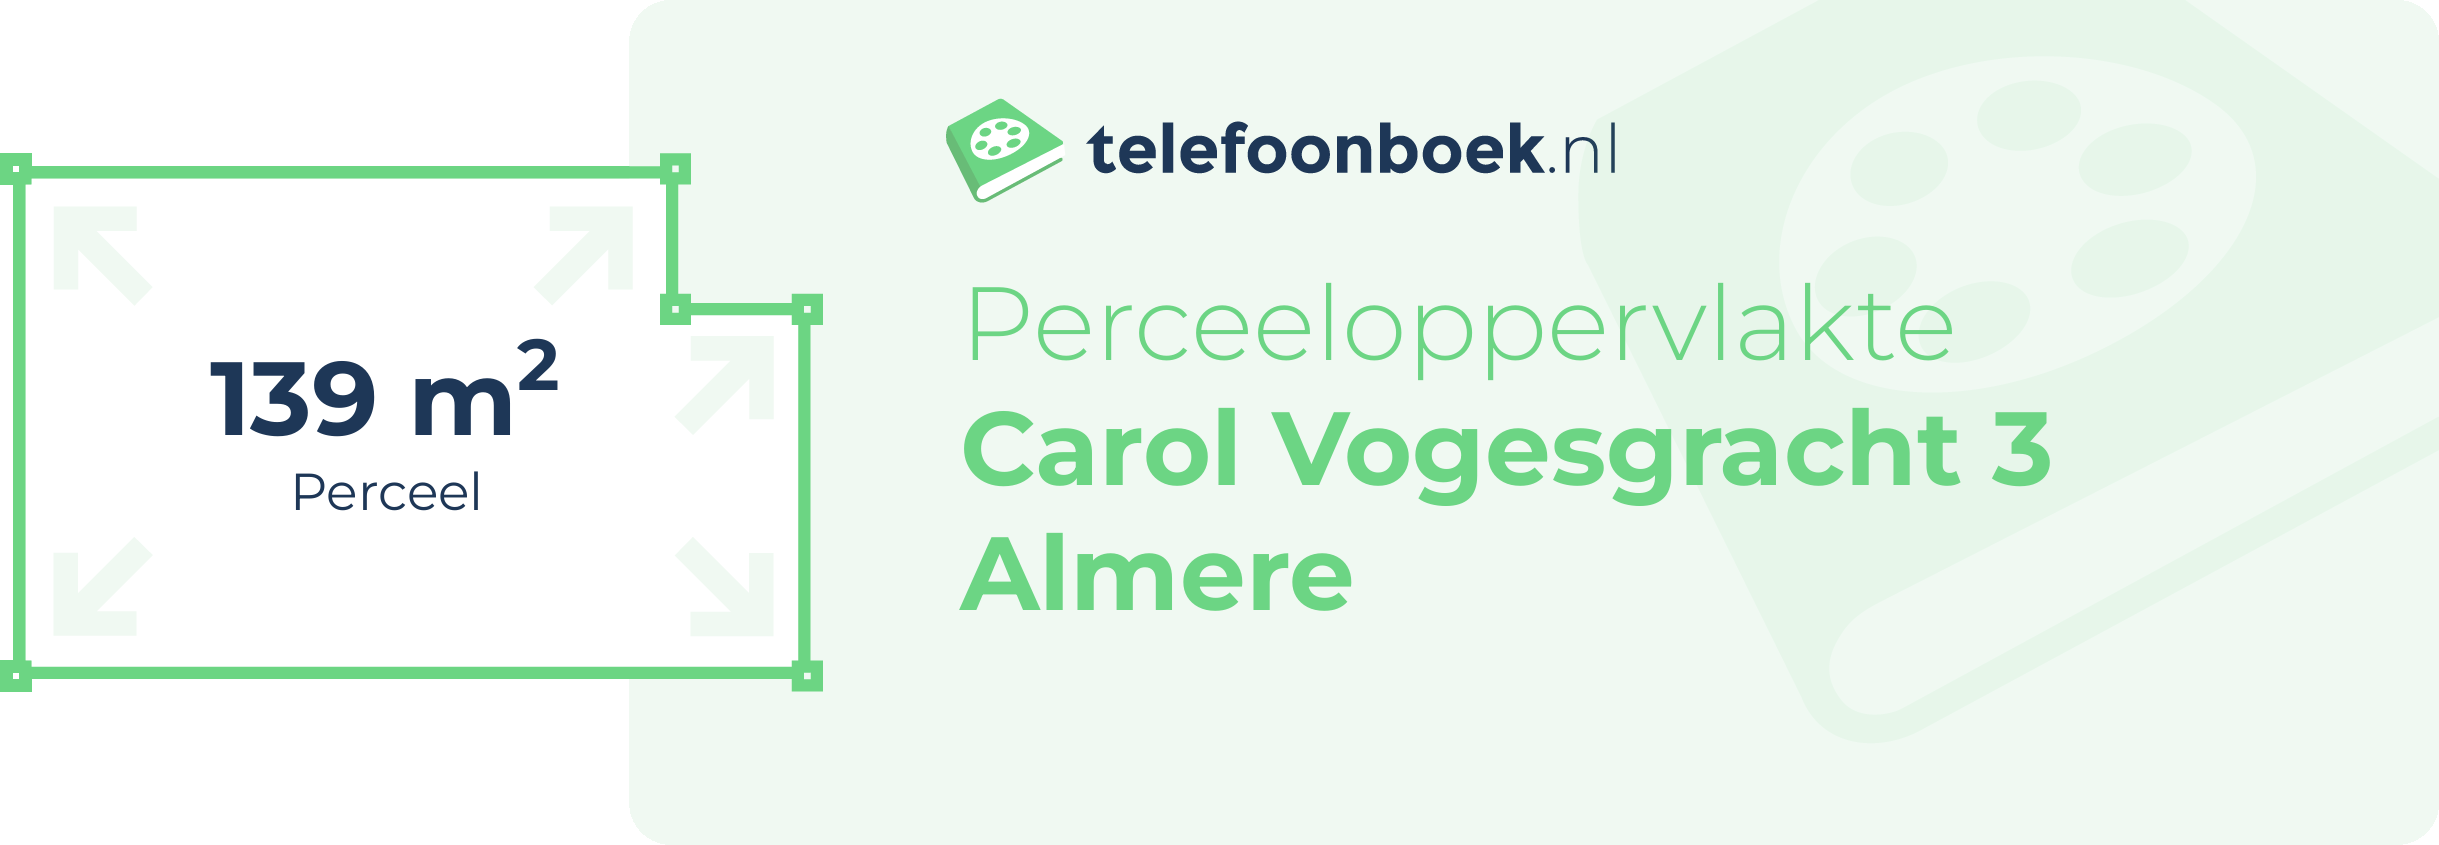 Perceeloppervlakte Carol Vogesgracht 3 Almere